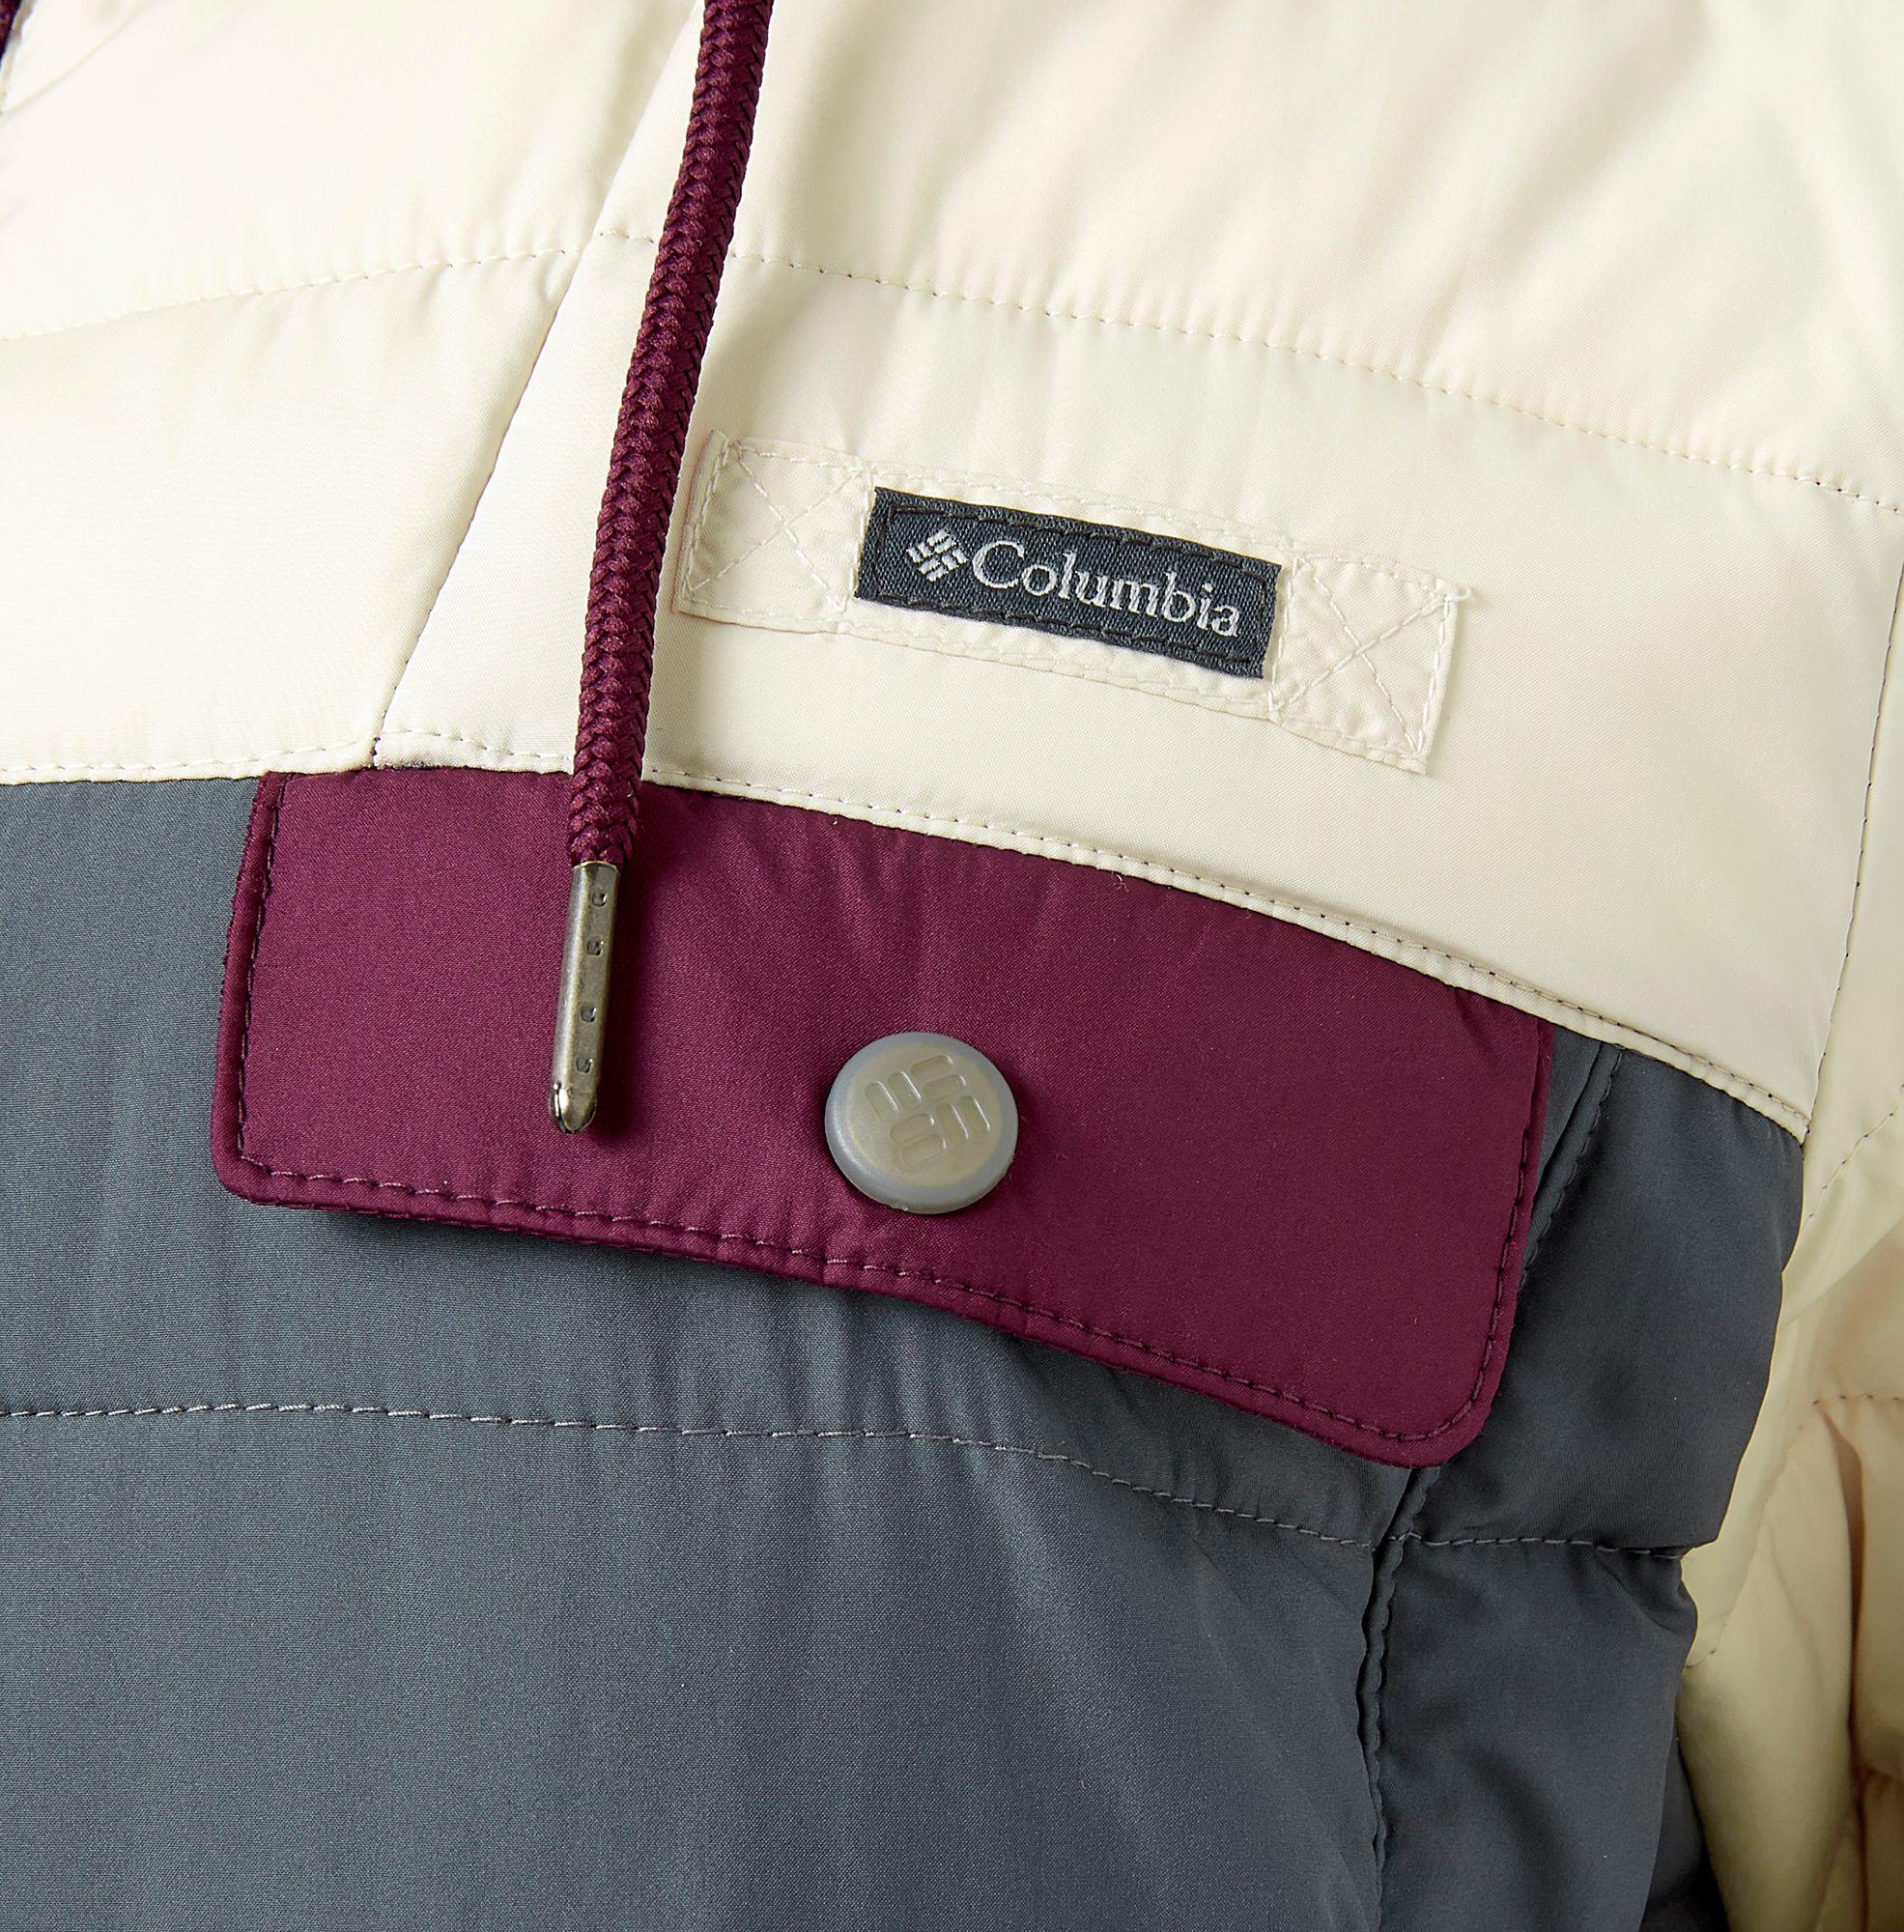 columbia women's mountainside full zip insulated jacket